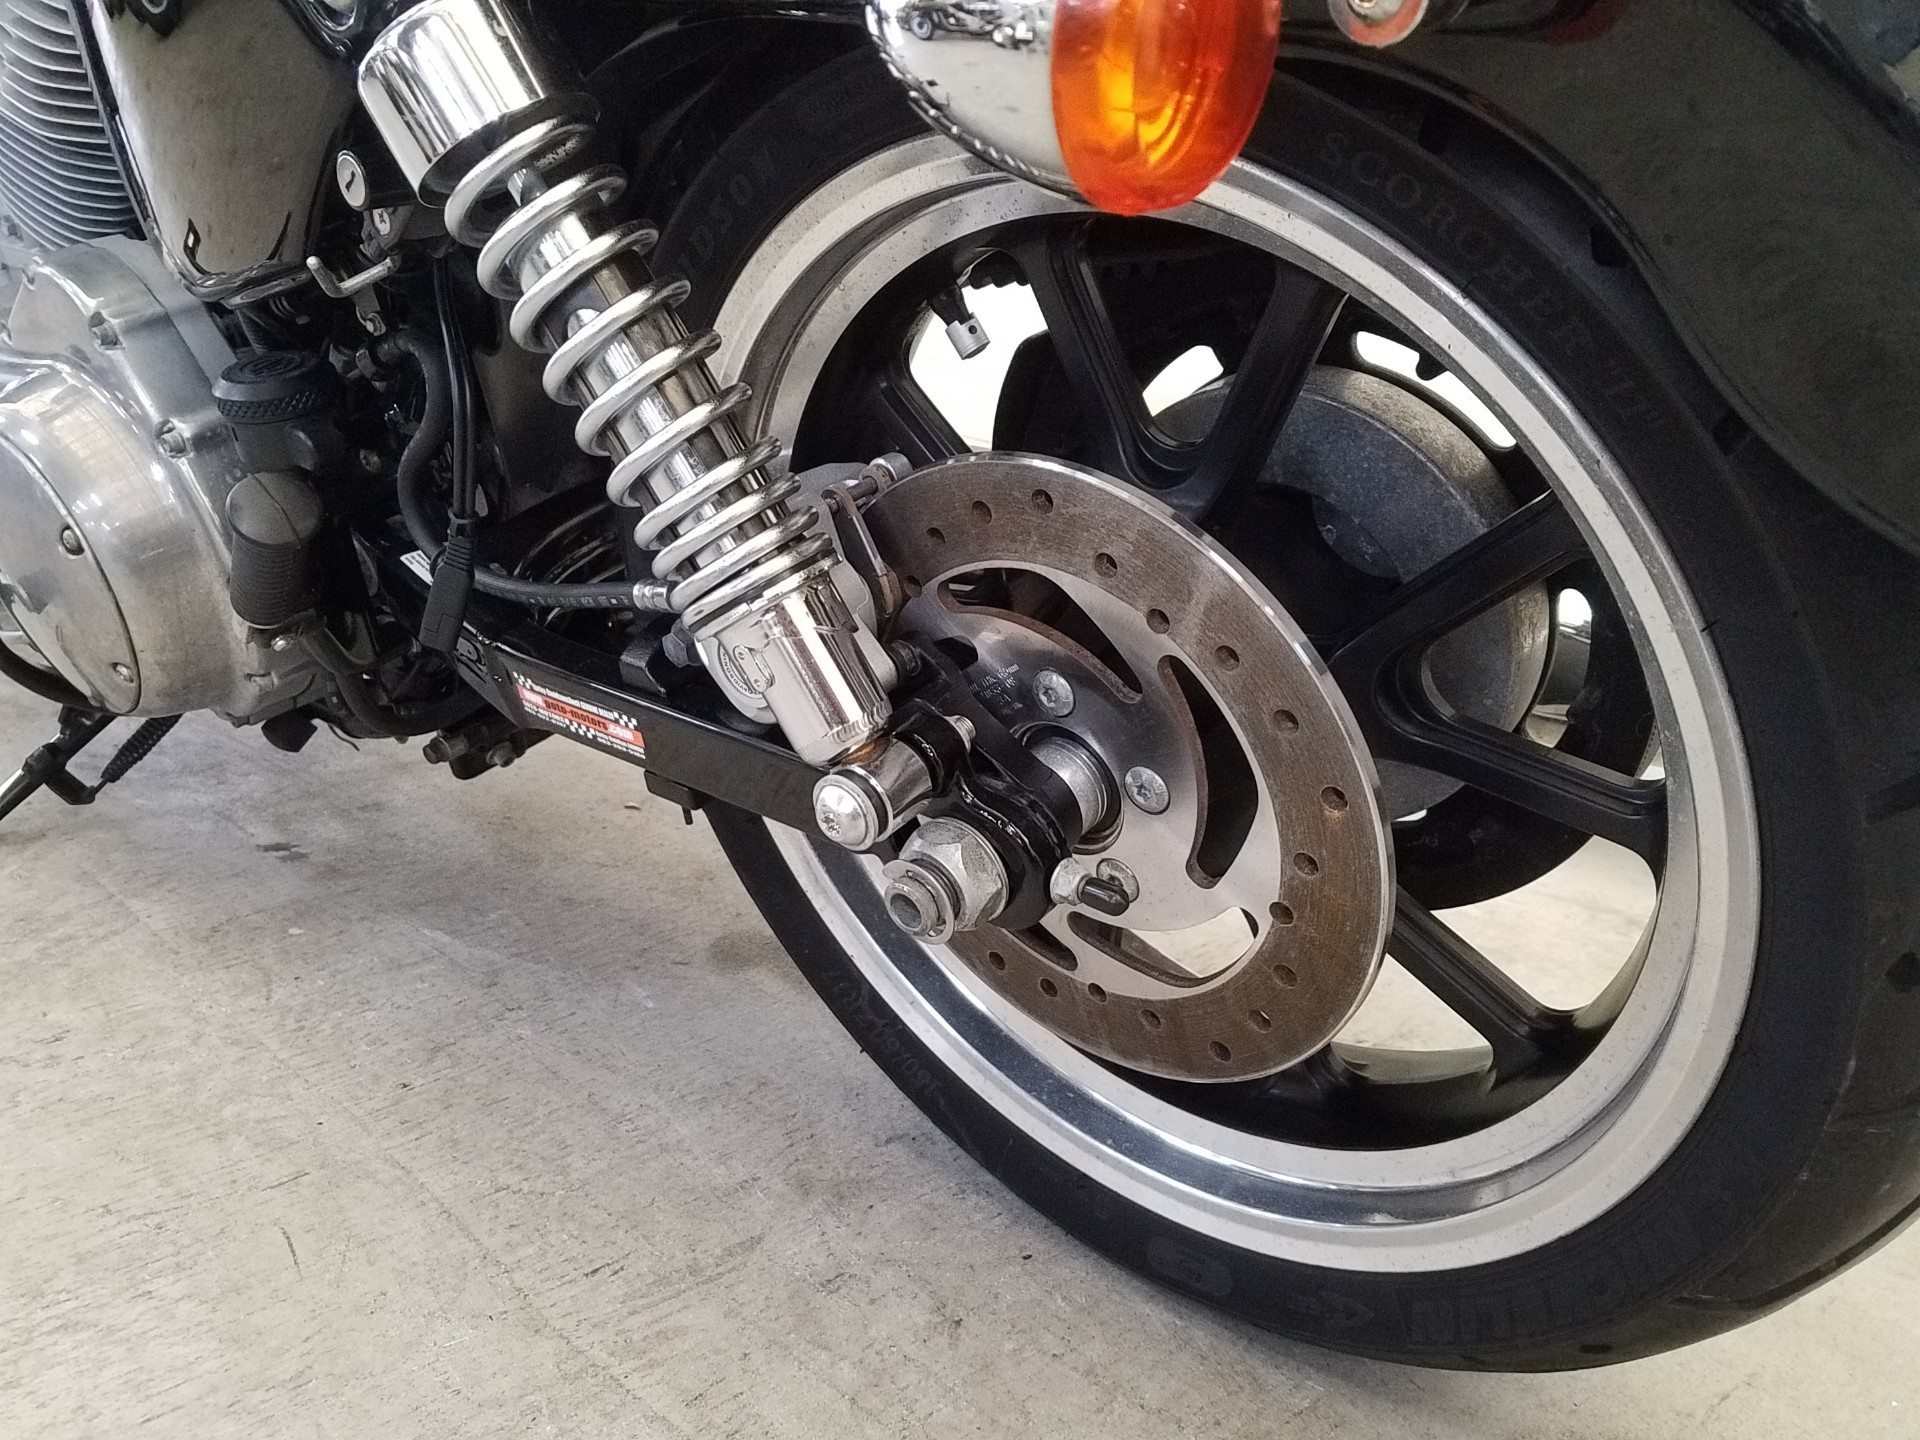 Harley-Davidson SPORTSTER XL883L CR2 - купить недорого